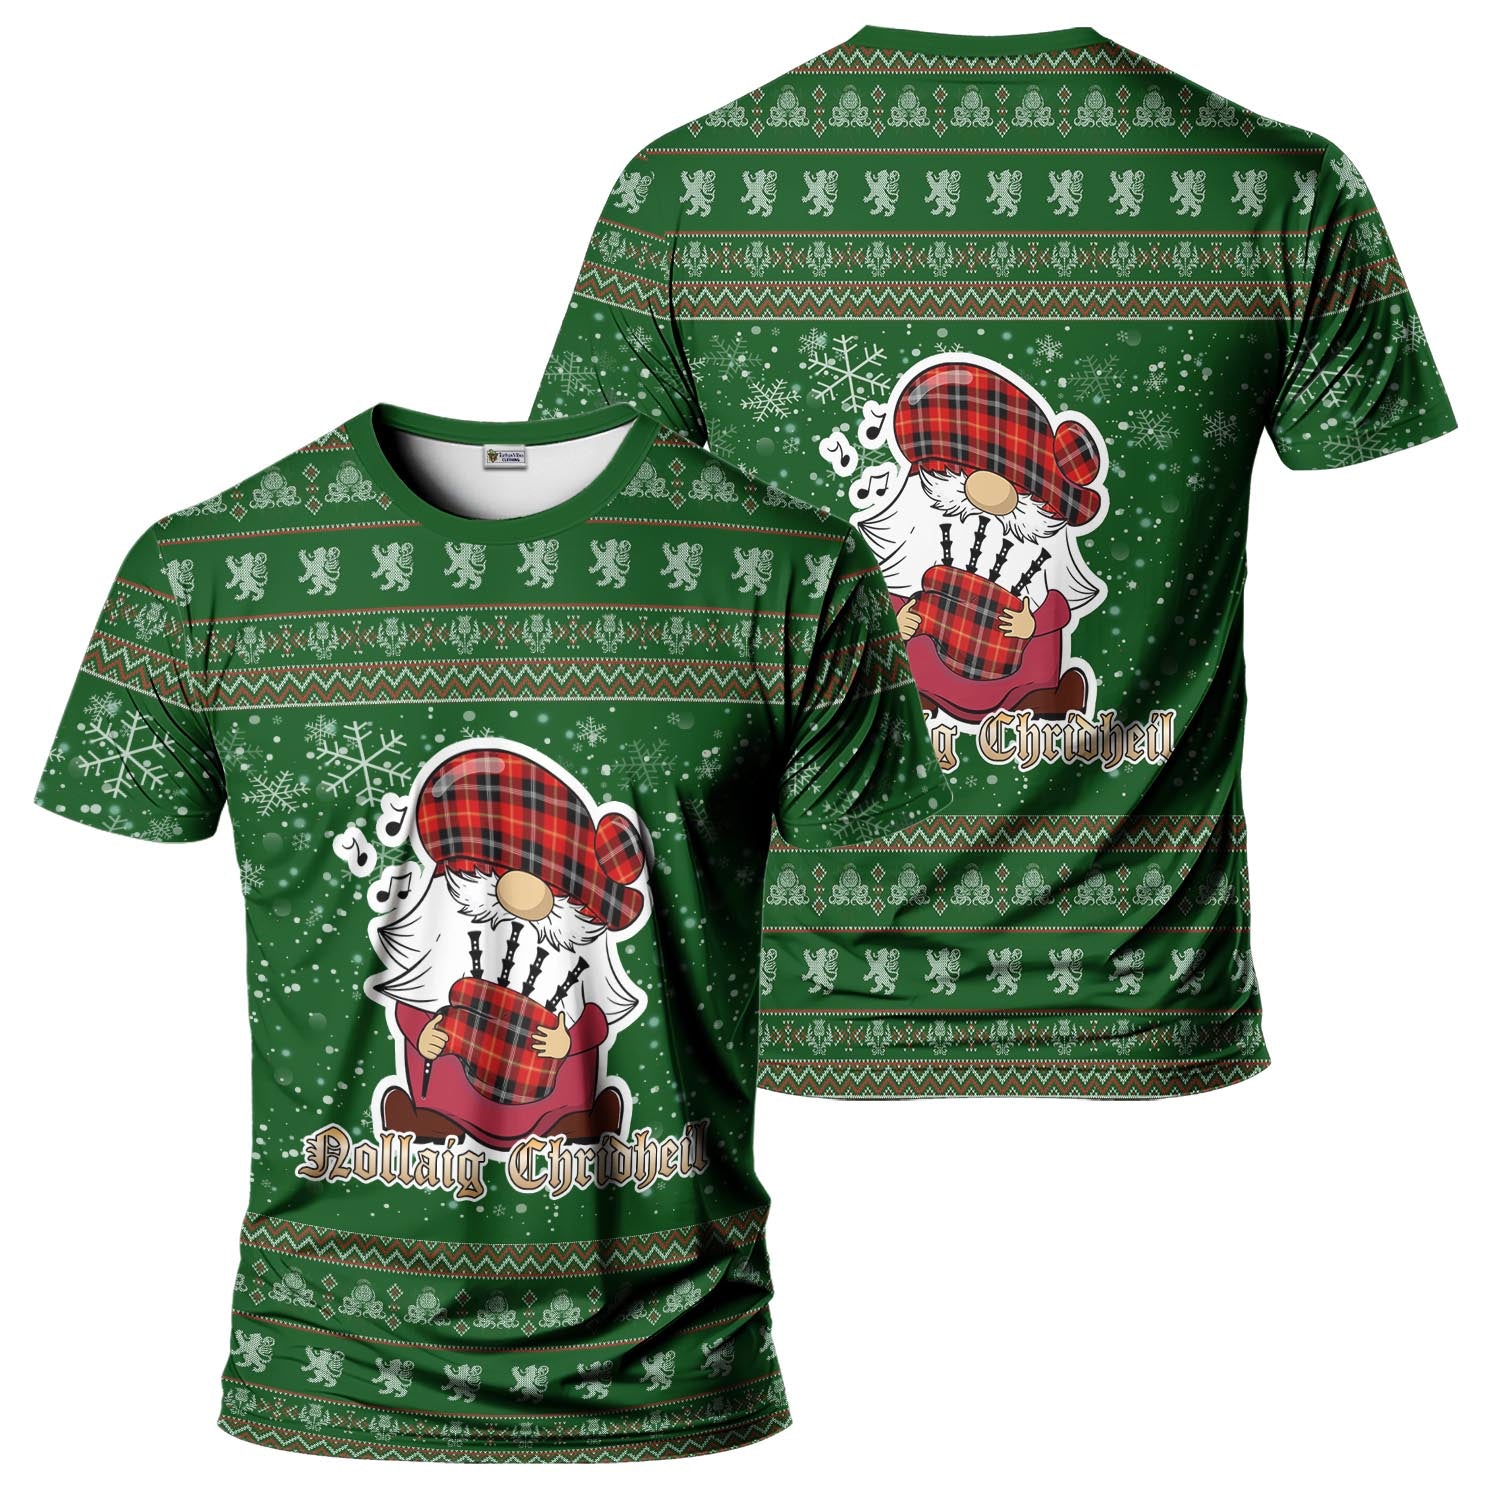 Majoribanks Clan Christmas Family T-Shirt with Funny Gnome Playing Bagpipes Men's Shirt Green - Tartanvibesclothing